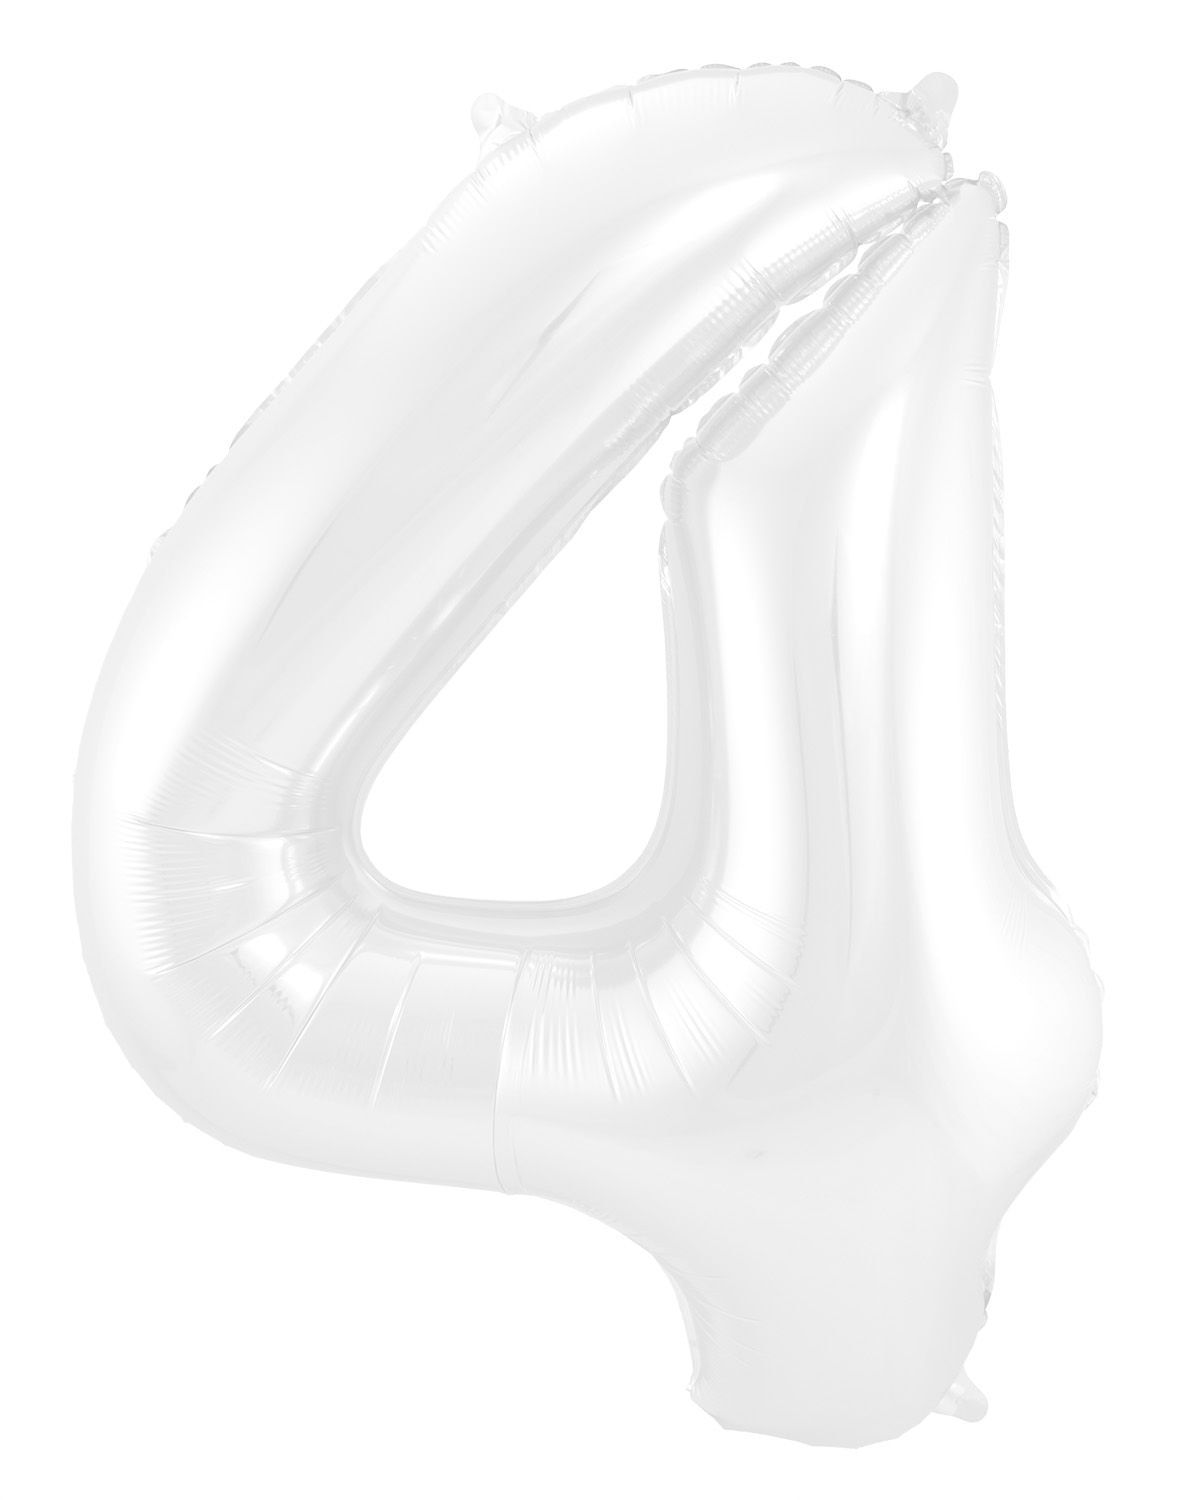 Cijfer 4 metallic wit folieballon 86cm